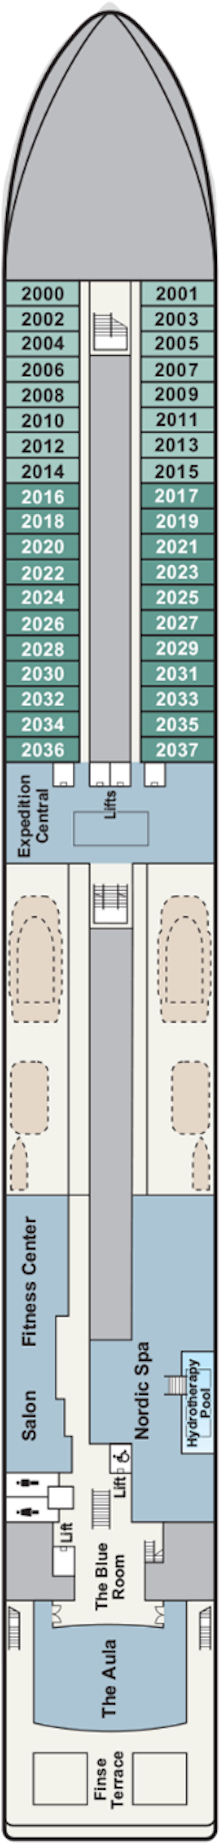 Viking Octantis Deck 2 Deck Plan